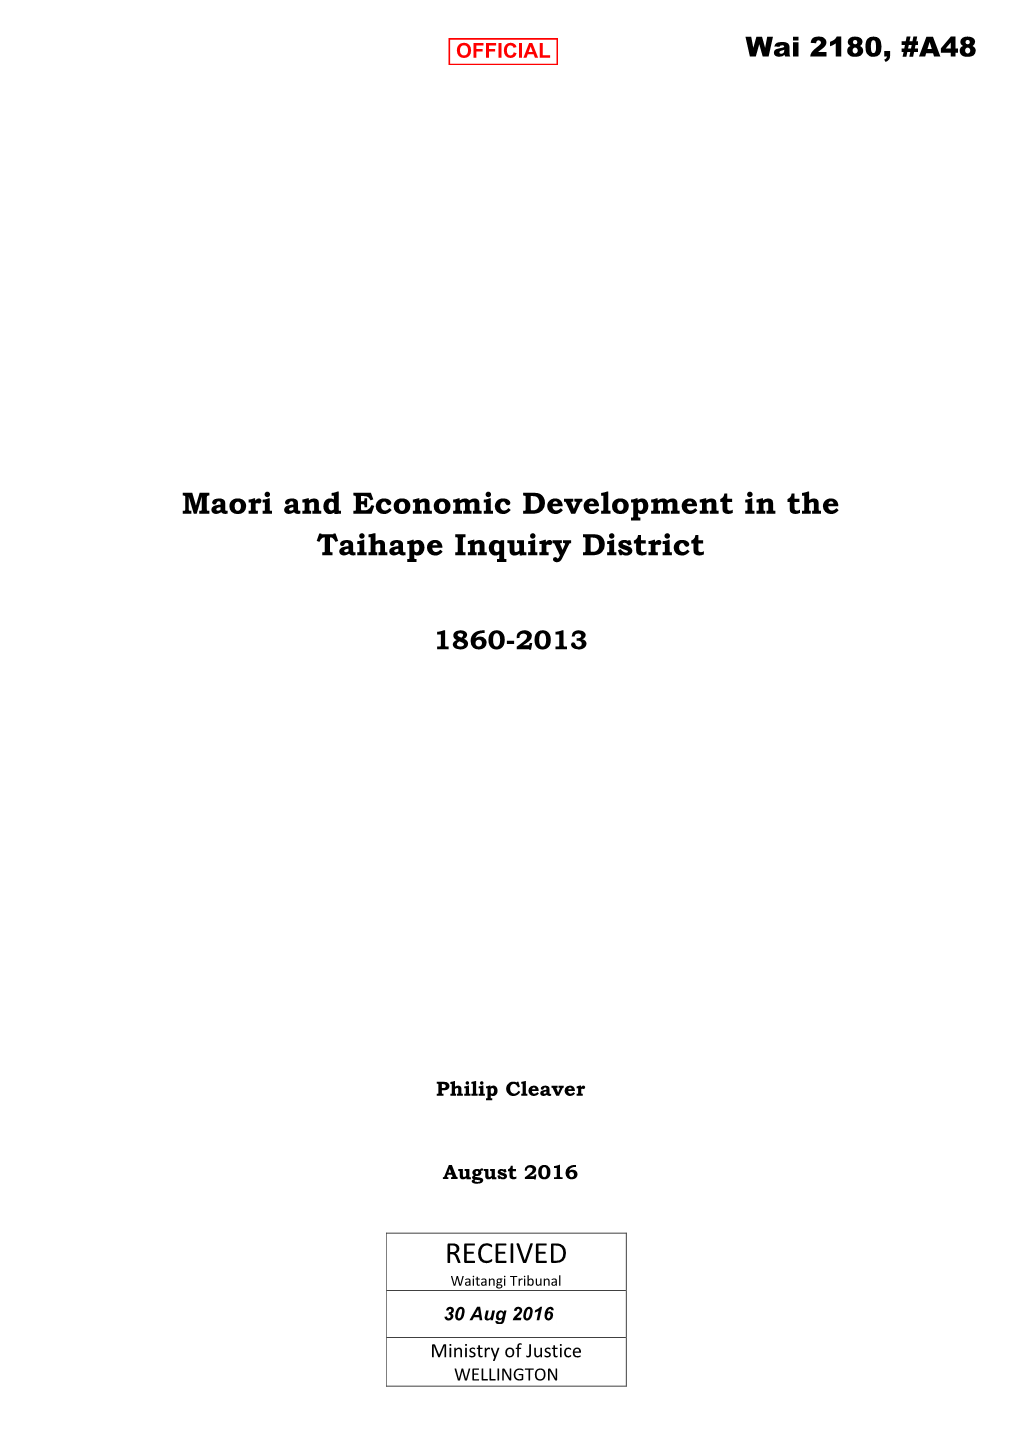 Maori and Economic Development in the Taihape Inquiry District